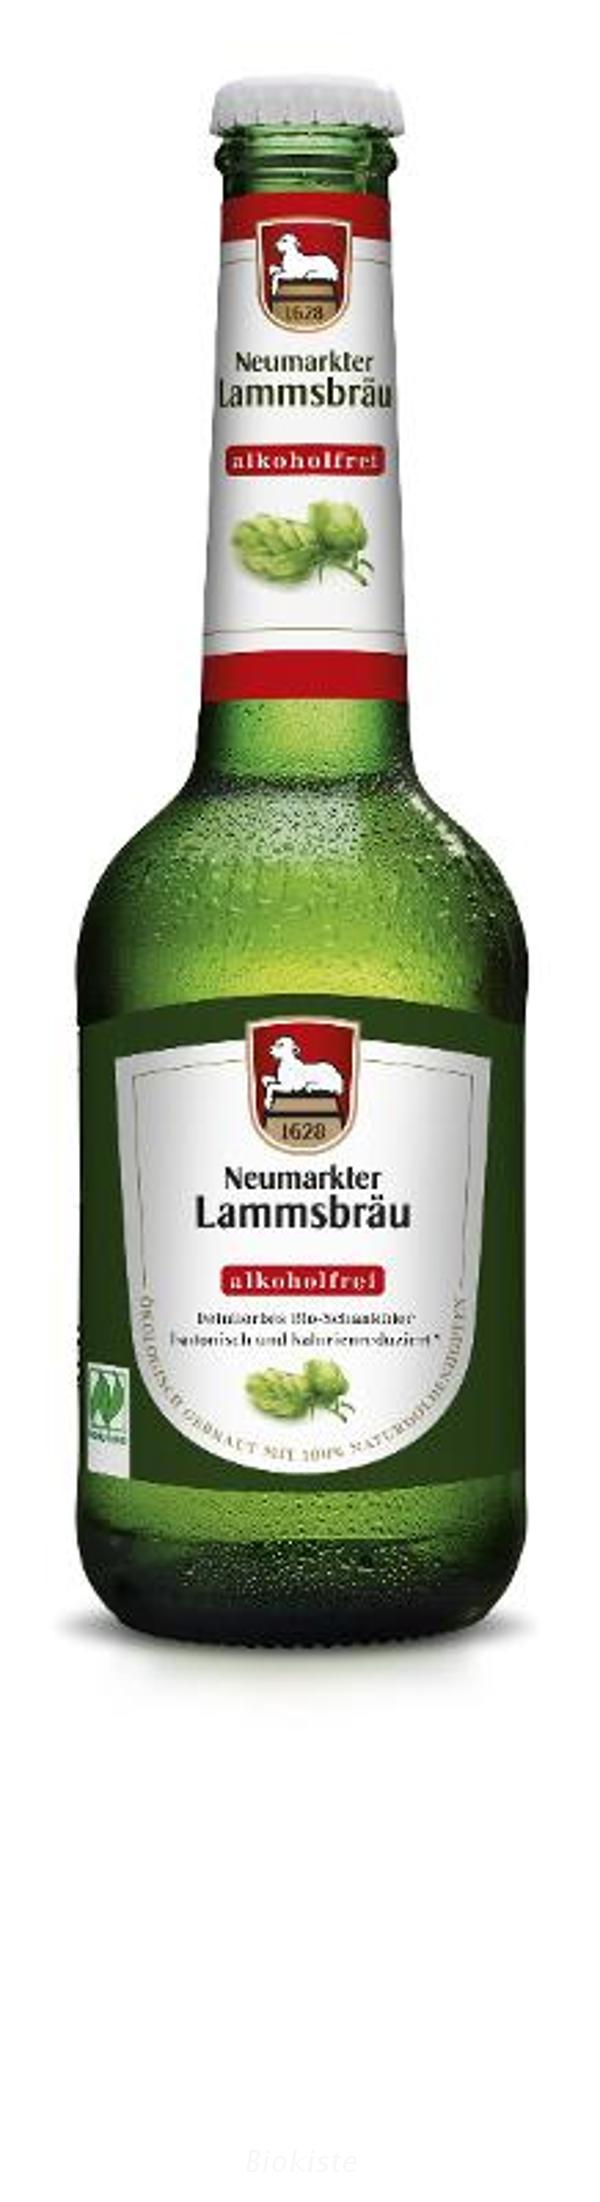 Produktfoto zu Lammsbräu alkoholfrei